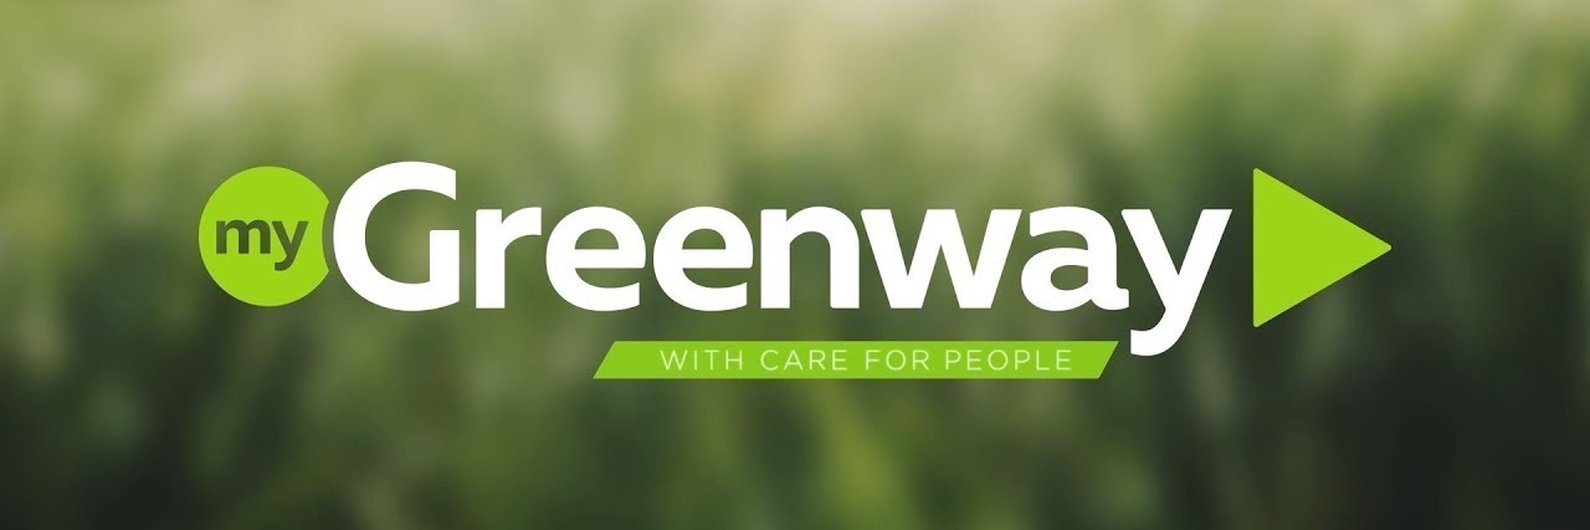 My Greenway новый логотип